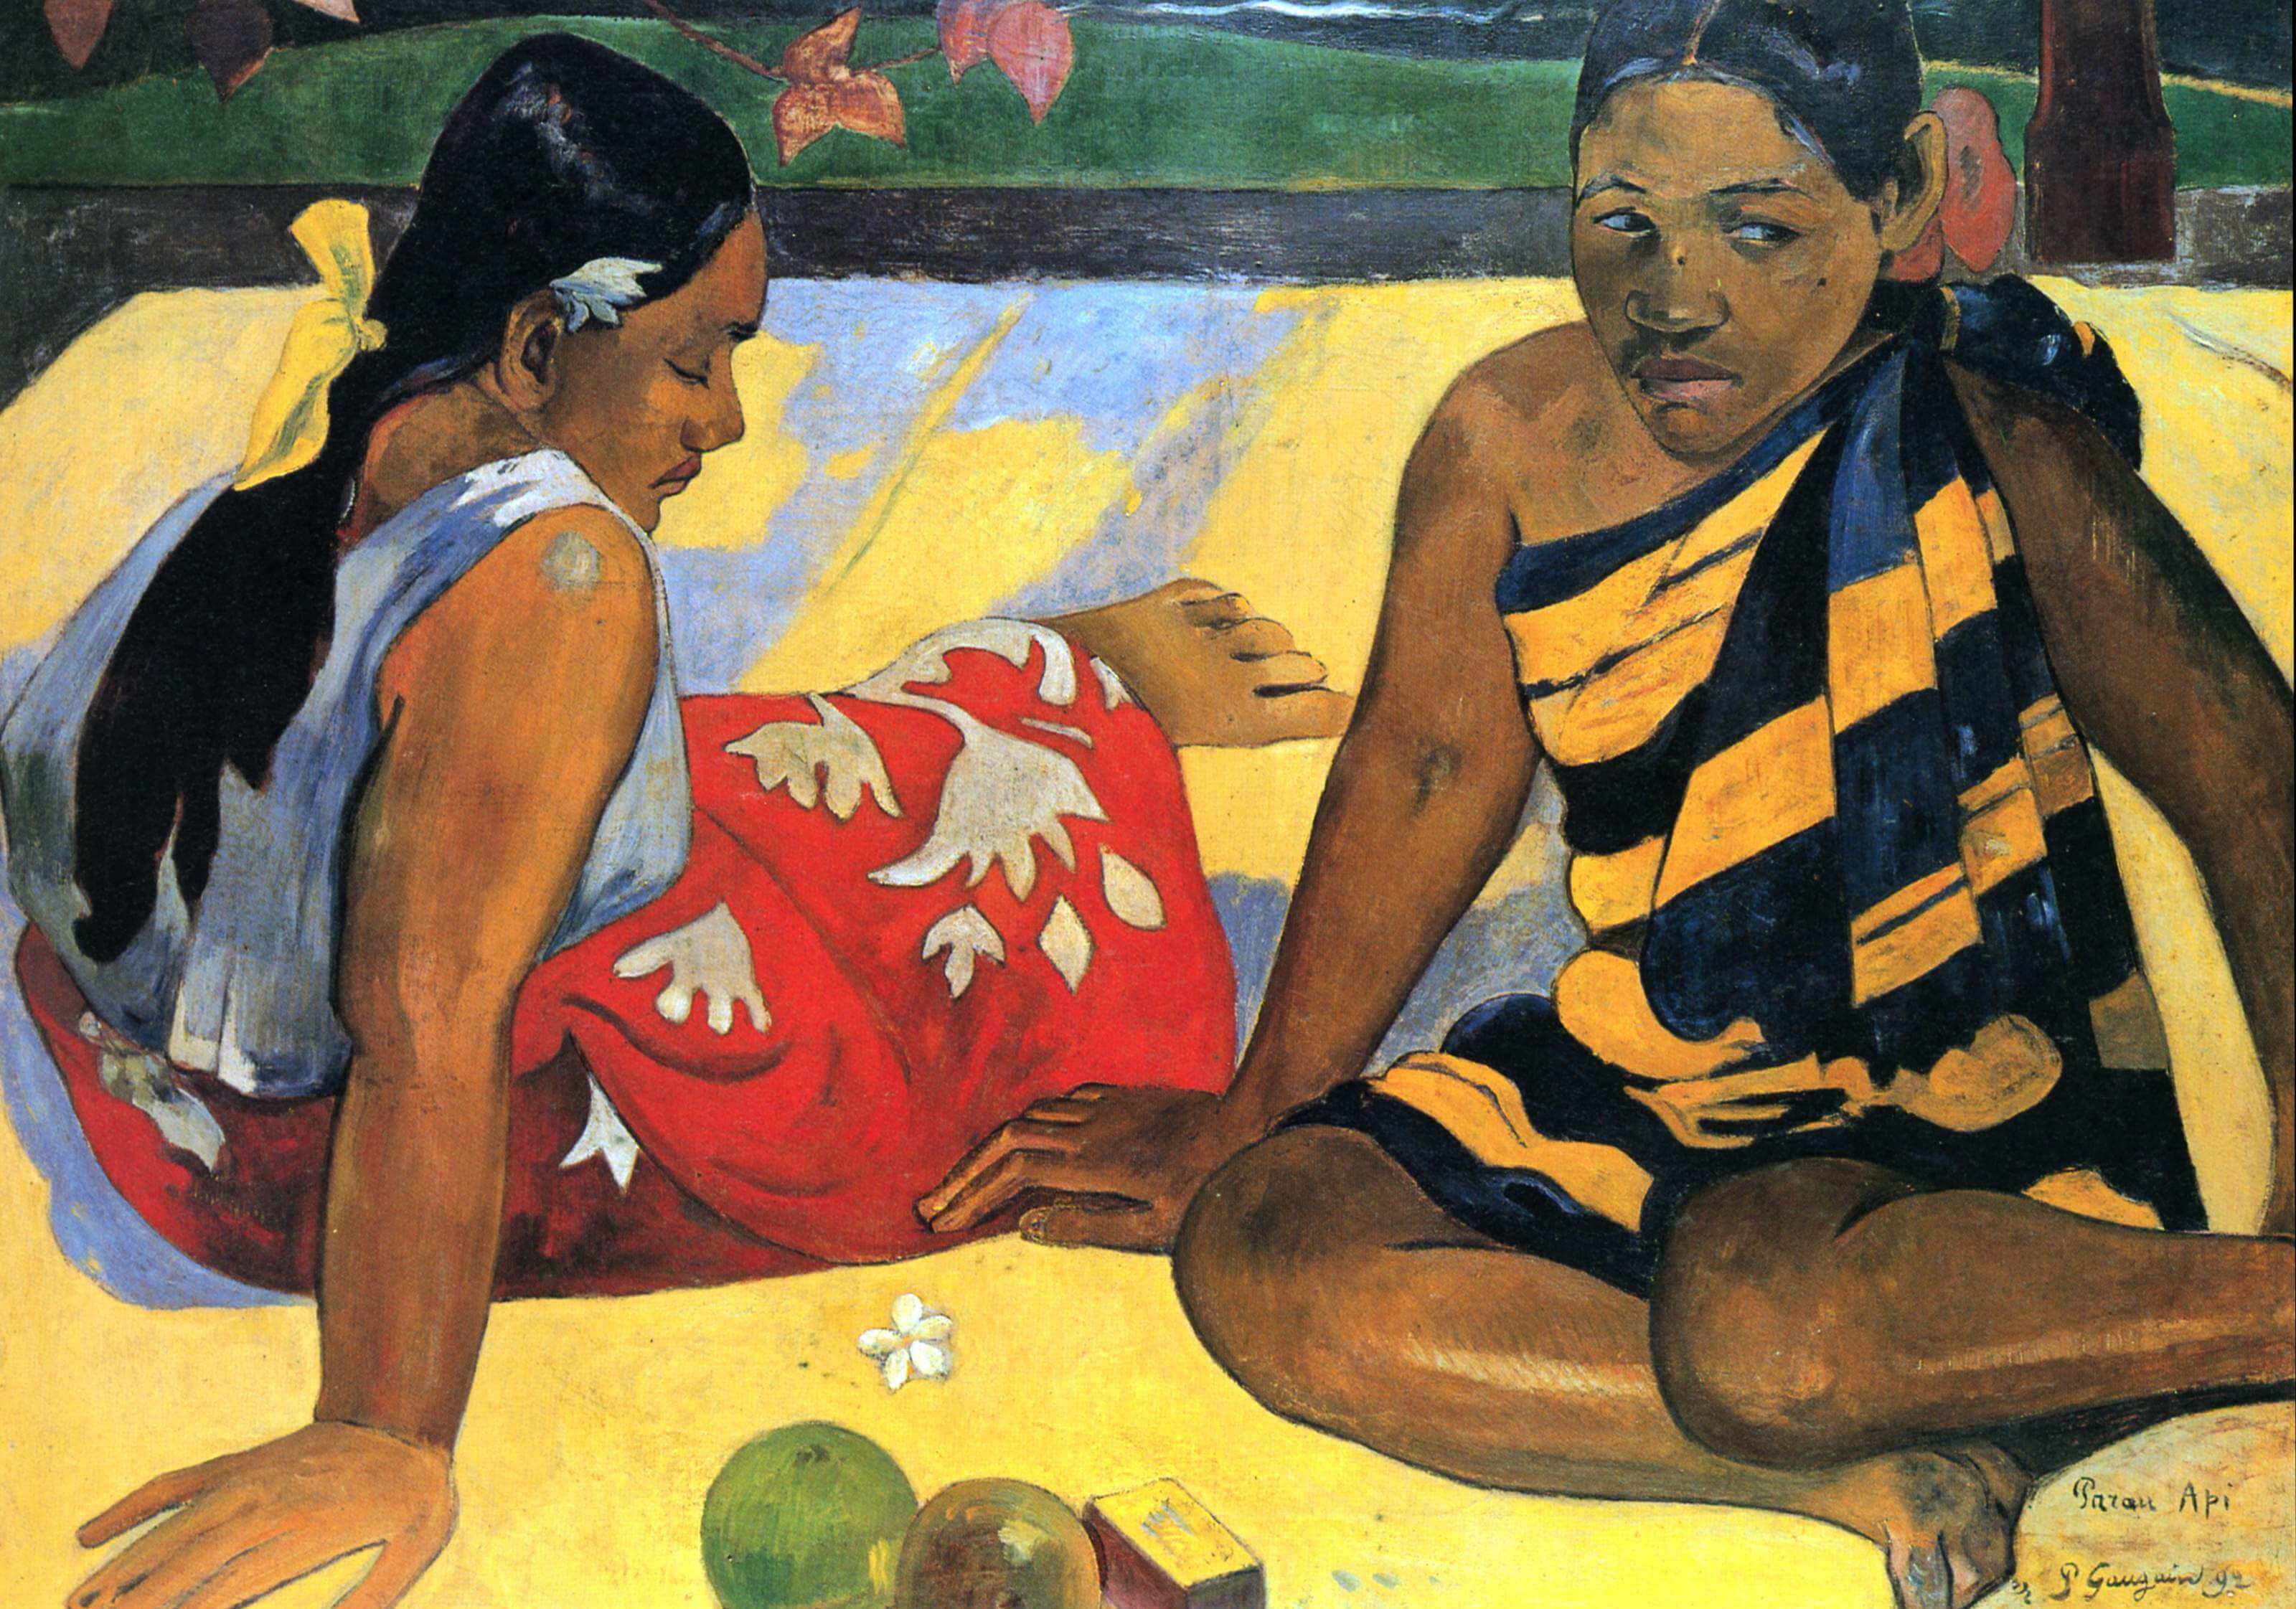 Paul Gauguin: una vita in bilico tra libertà e senso di costrizione